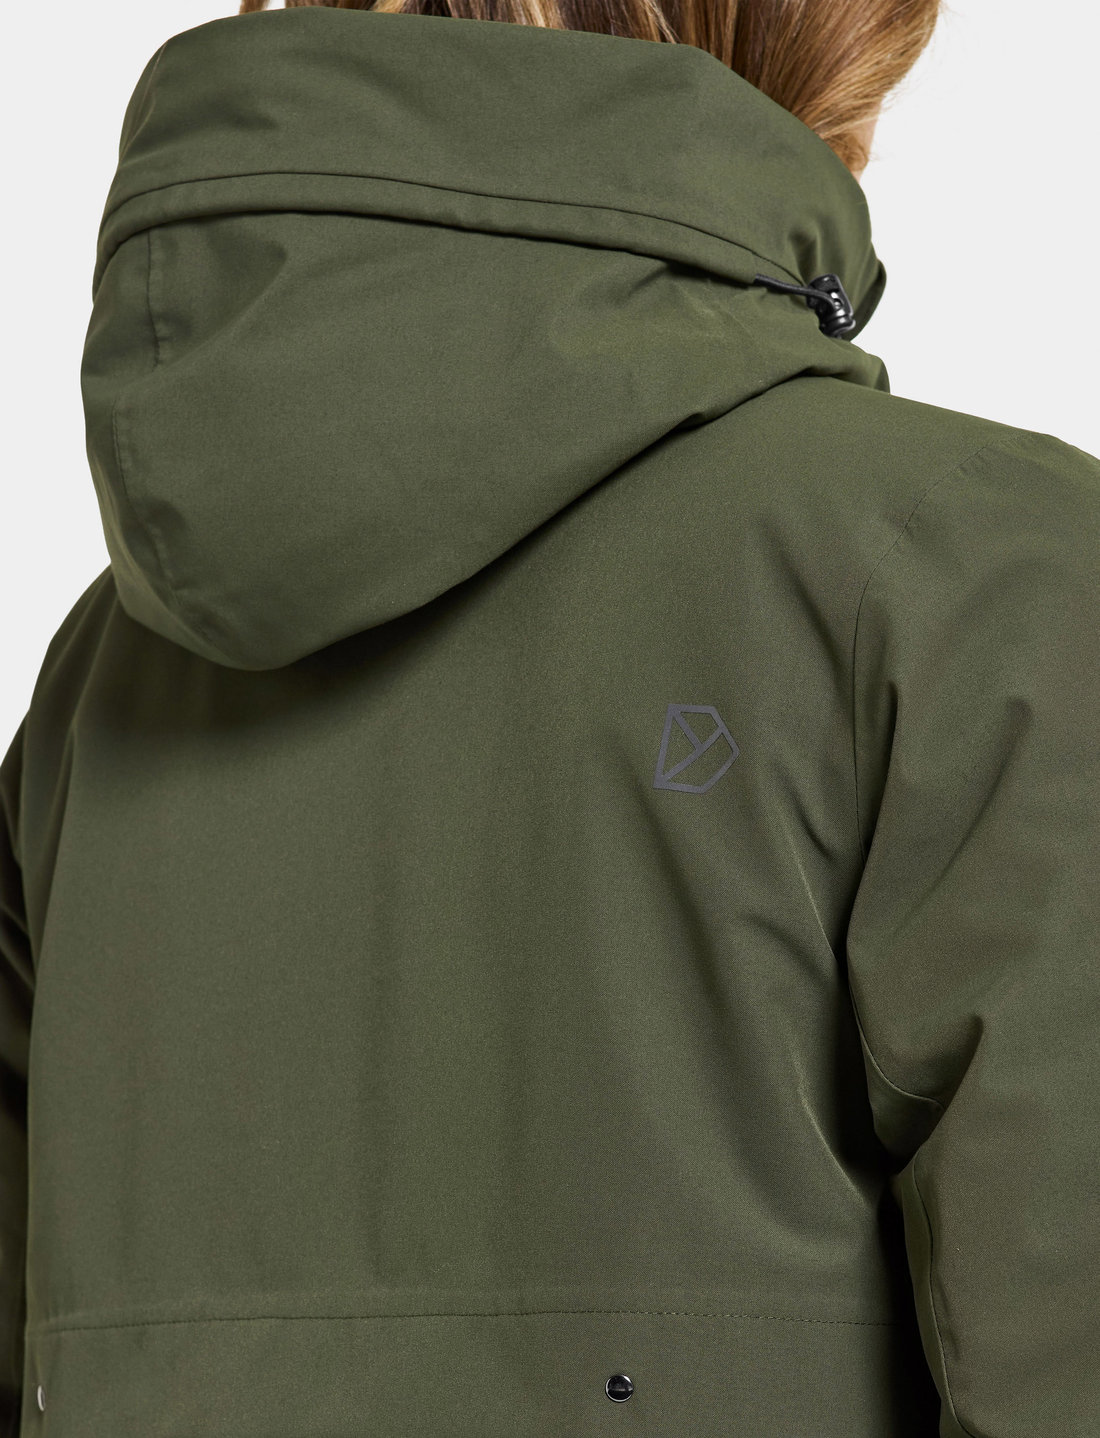 Didriksons Helle Wns Parka 5 – jackets & coats – shop at Booztlet